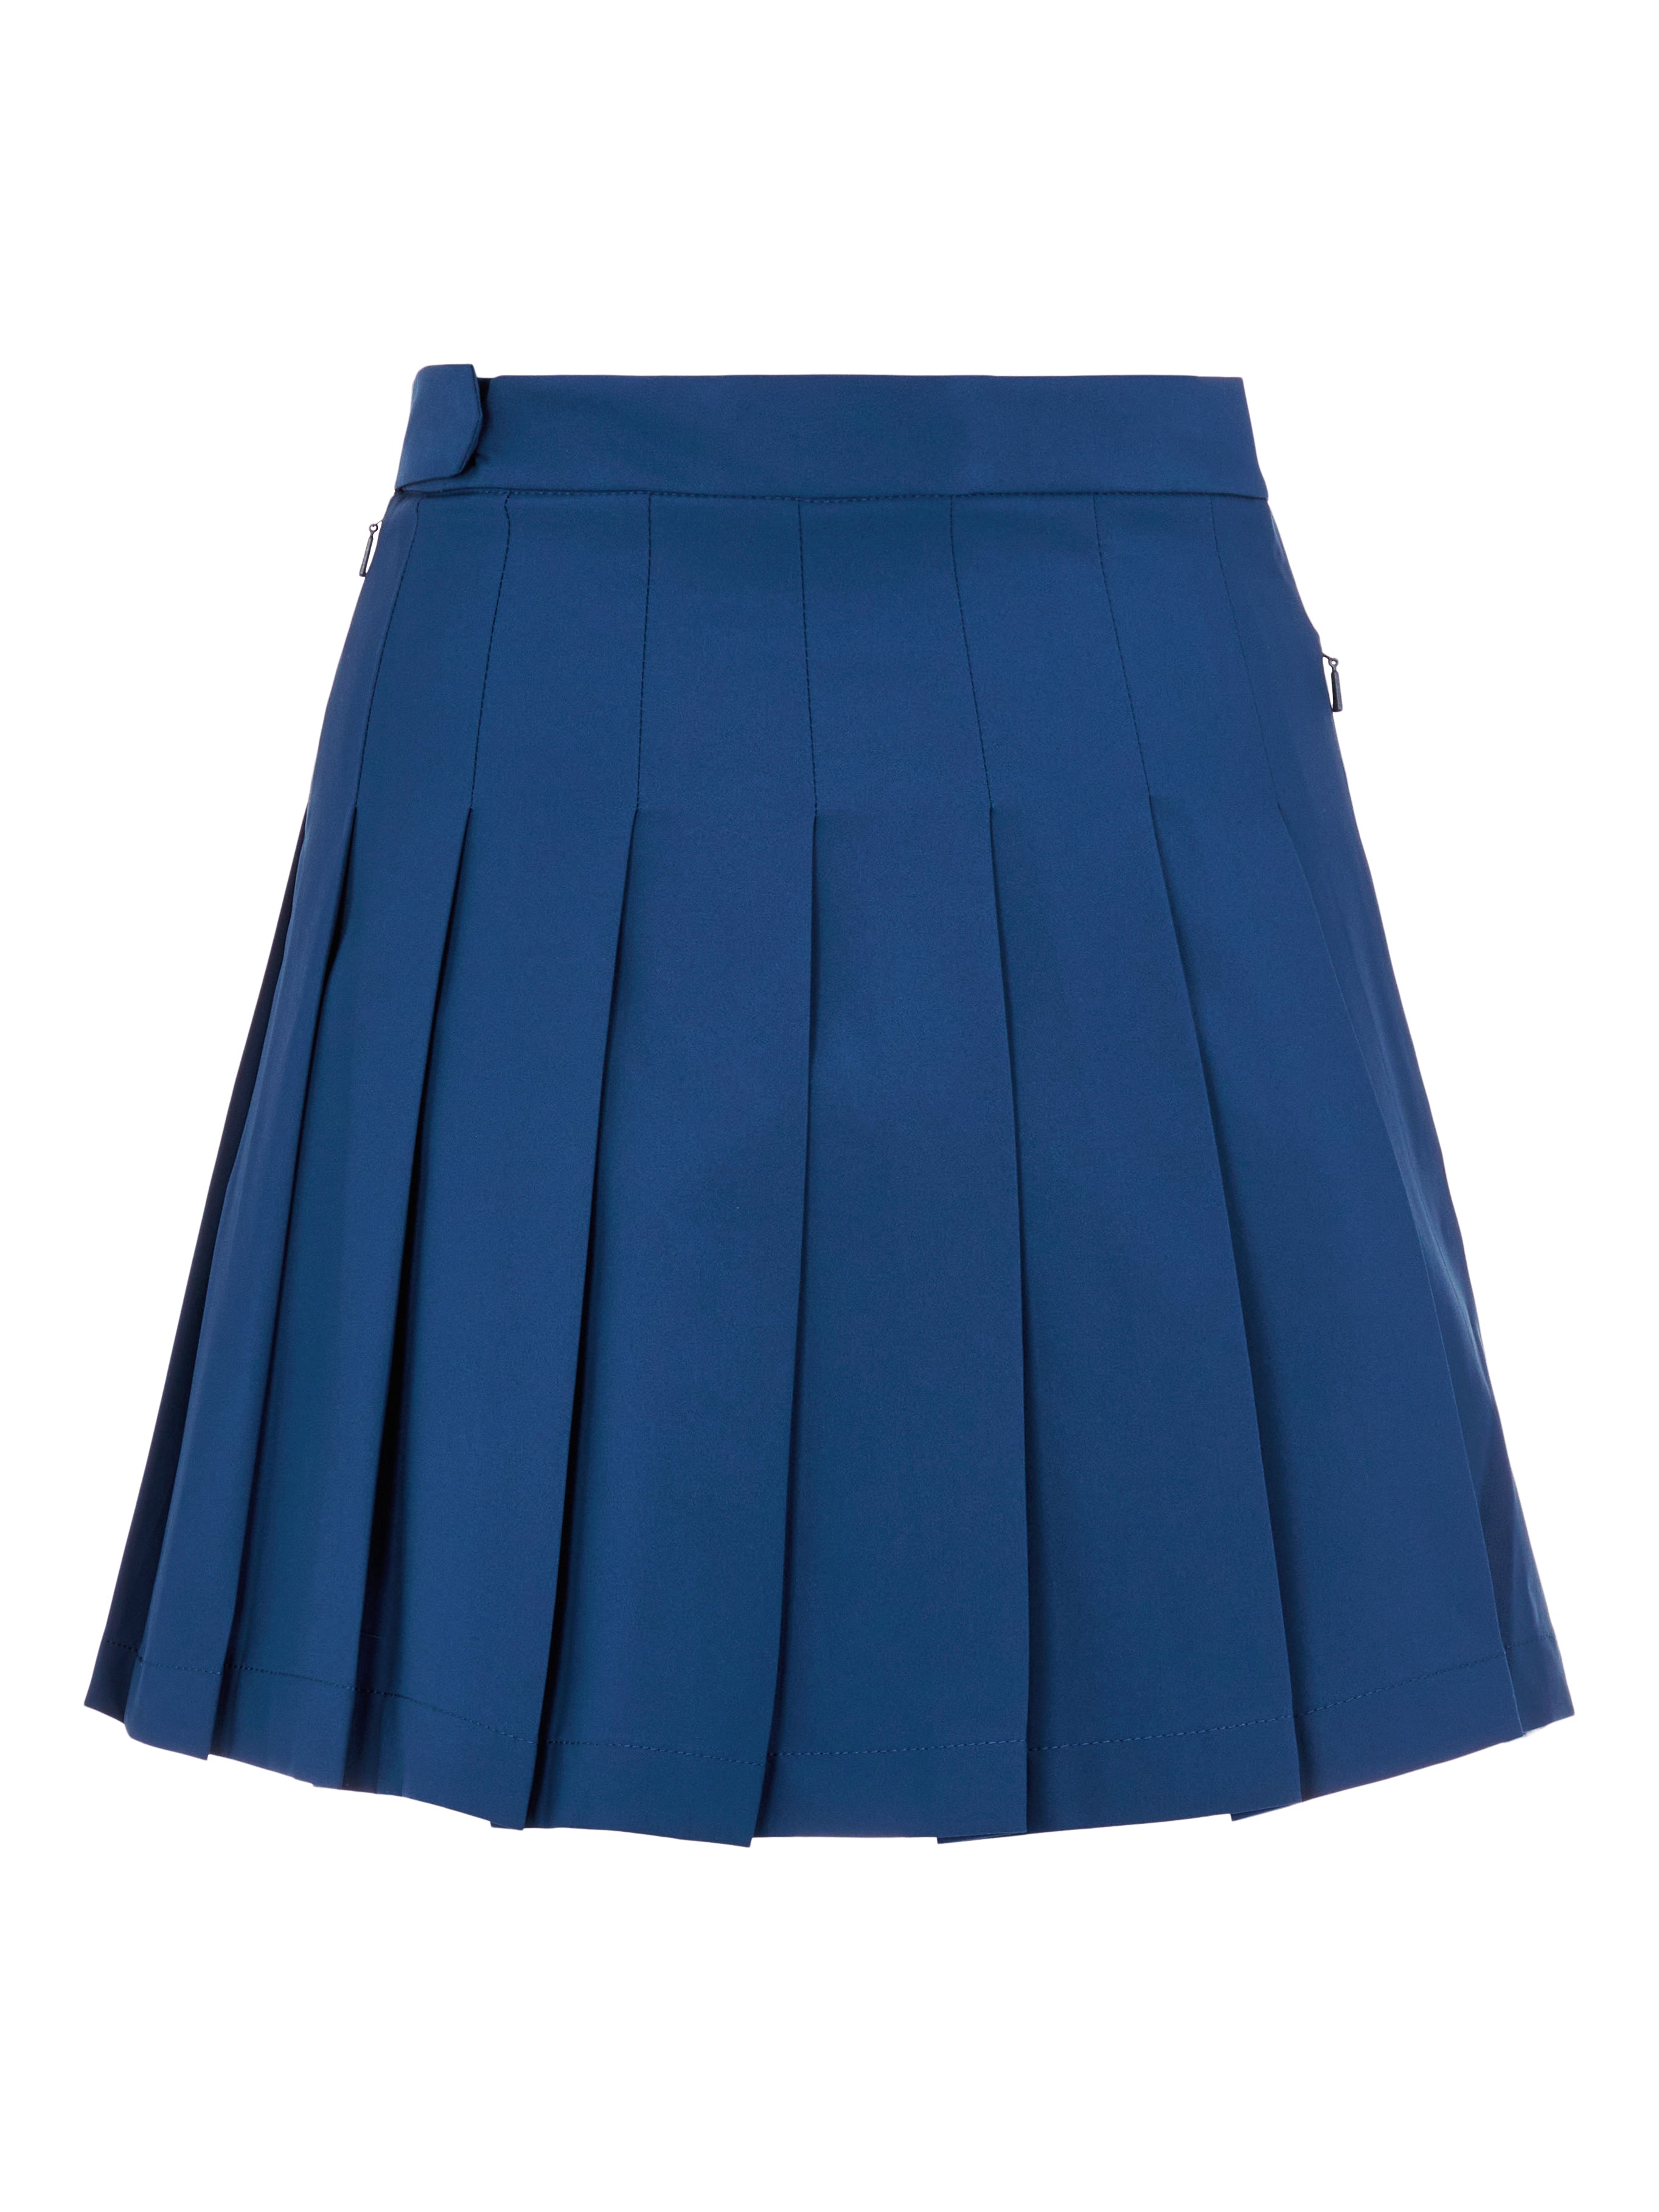 Adina Golf Skirt Midnight Blue